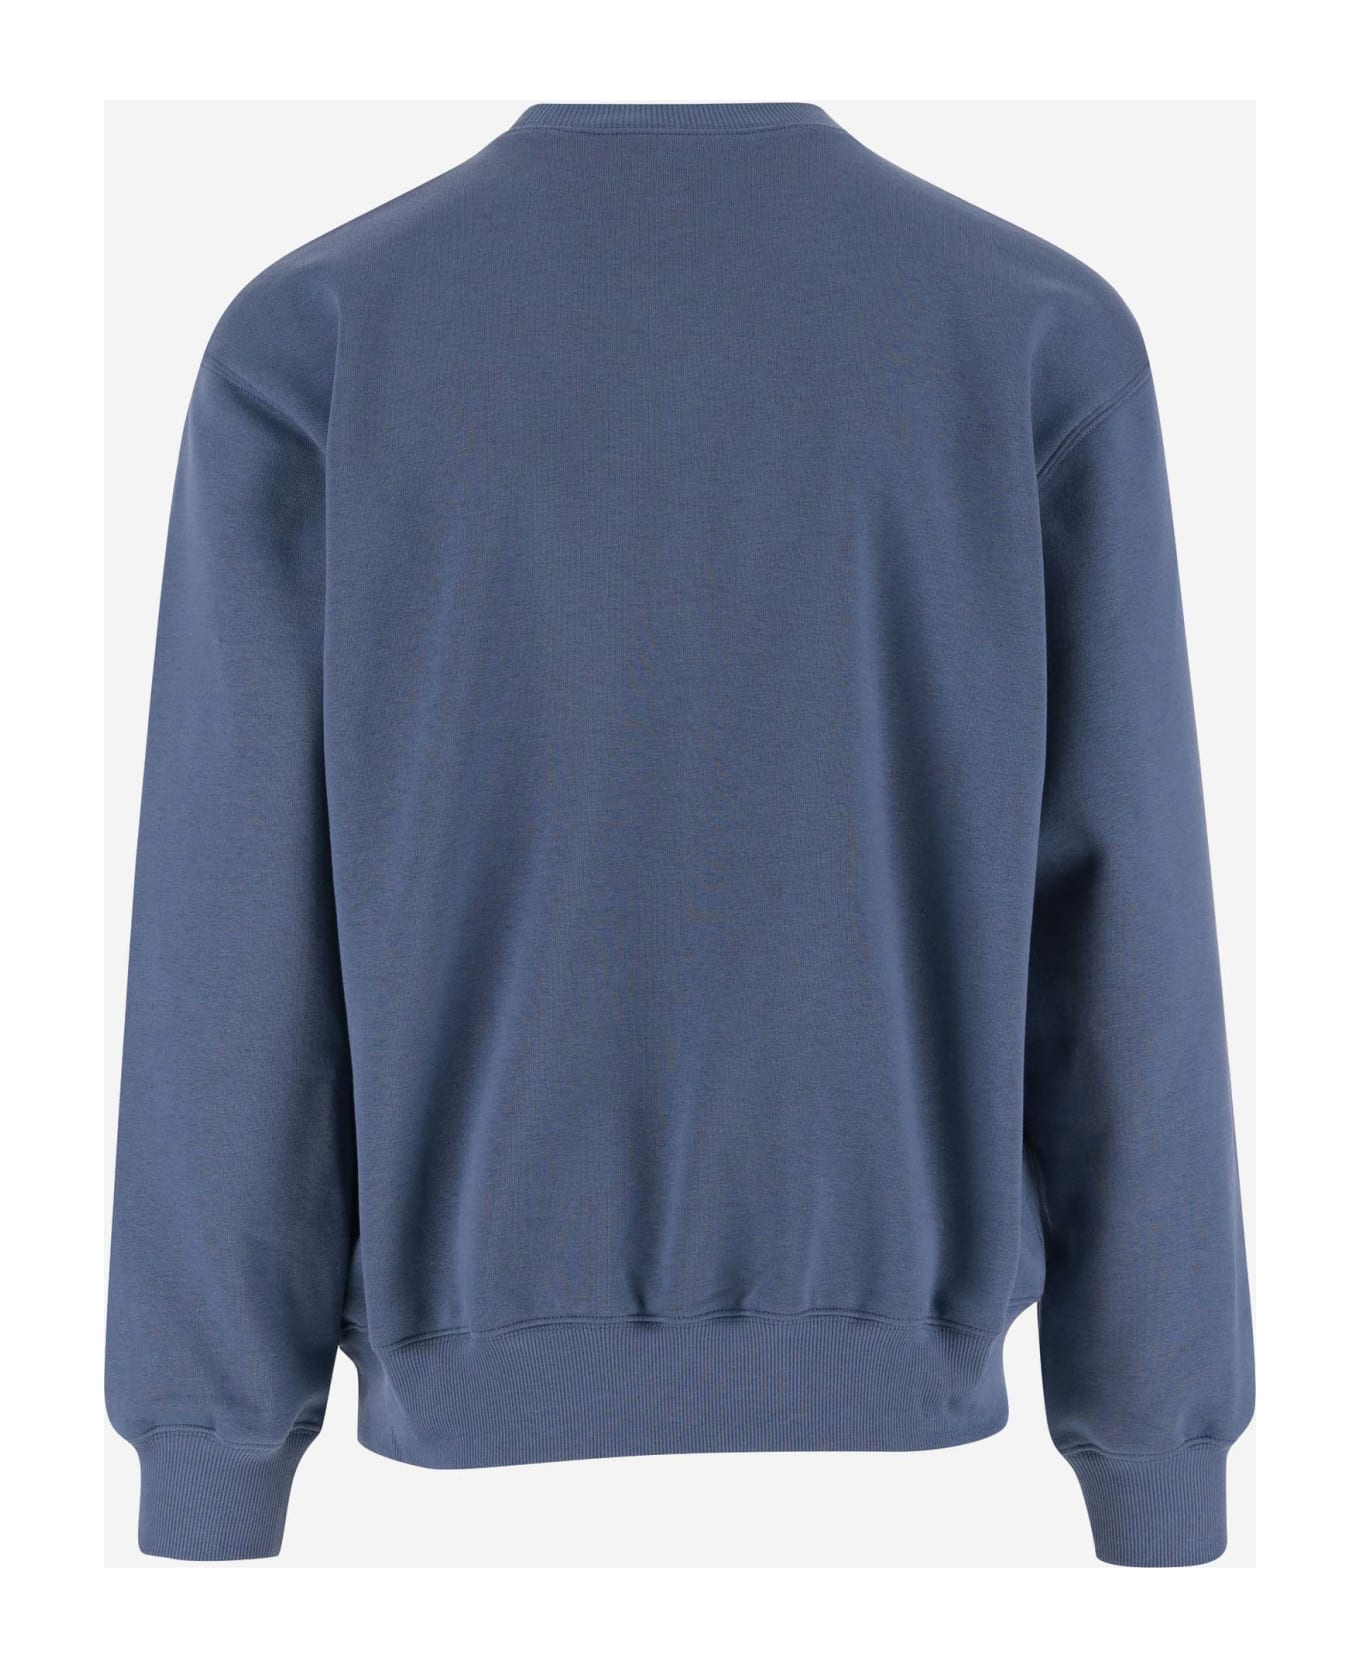 Carhartt Cotton Blend Sweatshirt With Logo - Blue